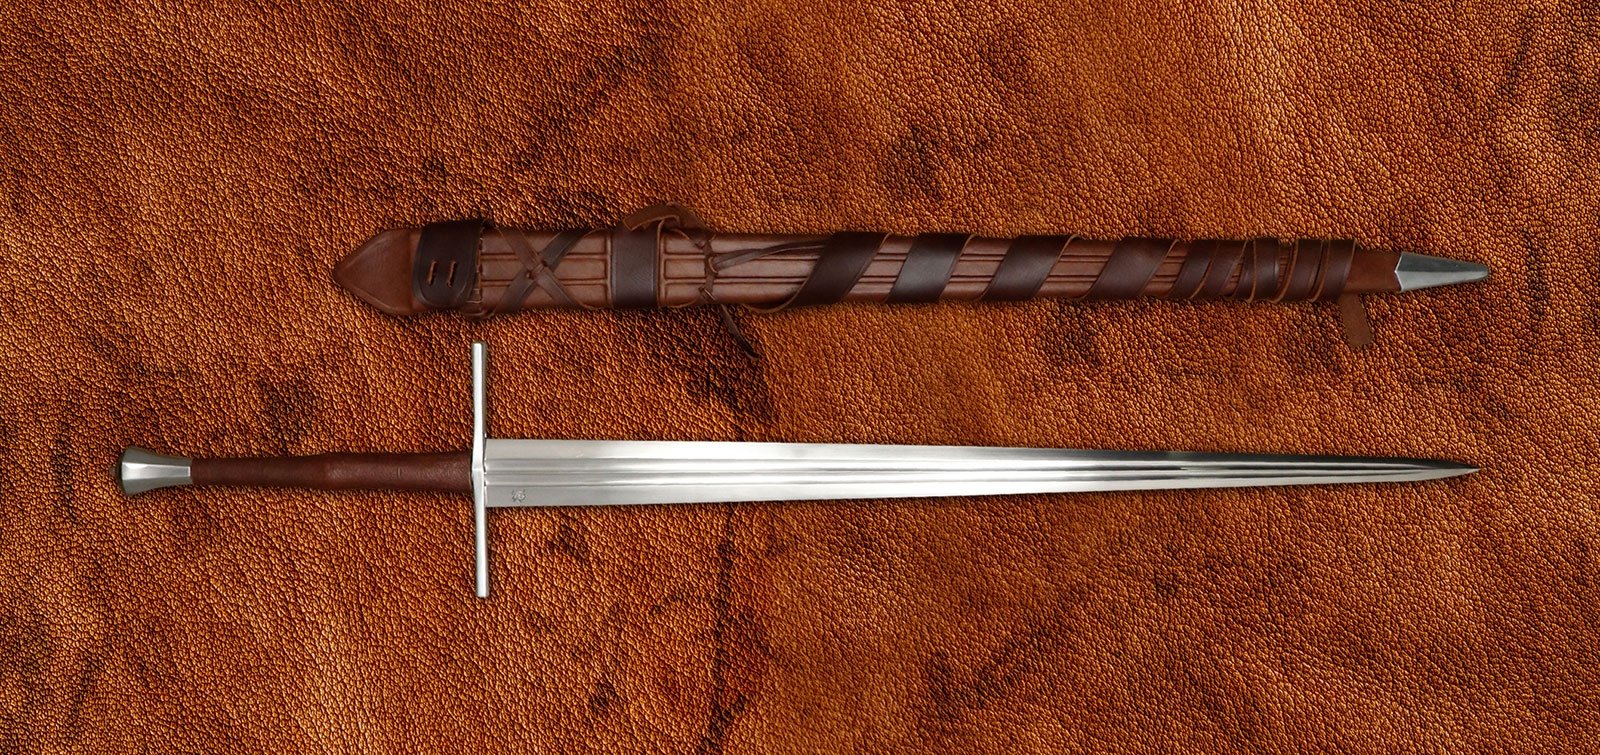 The Baron Sword